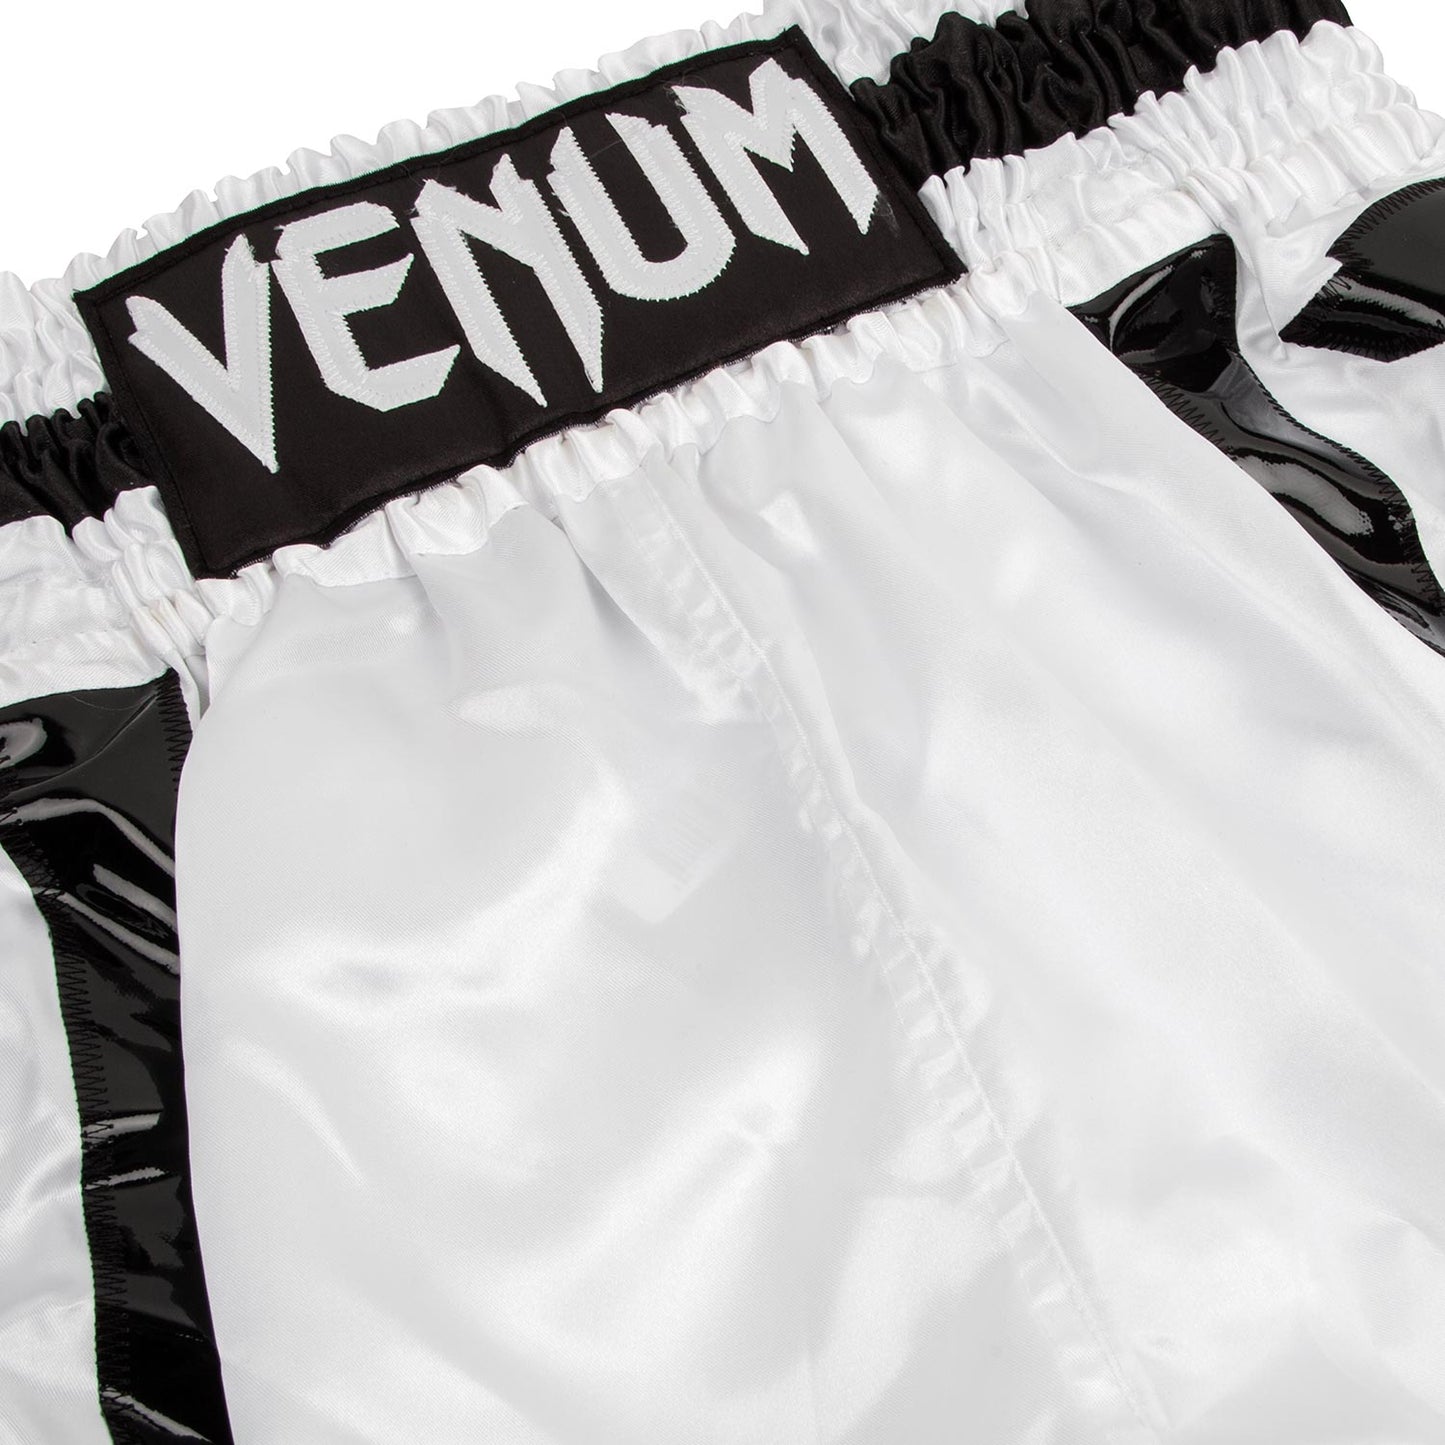 Venum Elite Boxing Shorts - White/Black